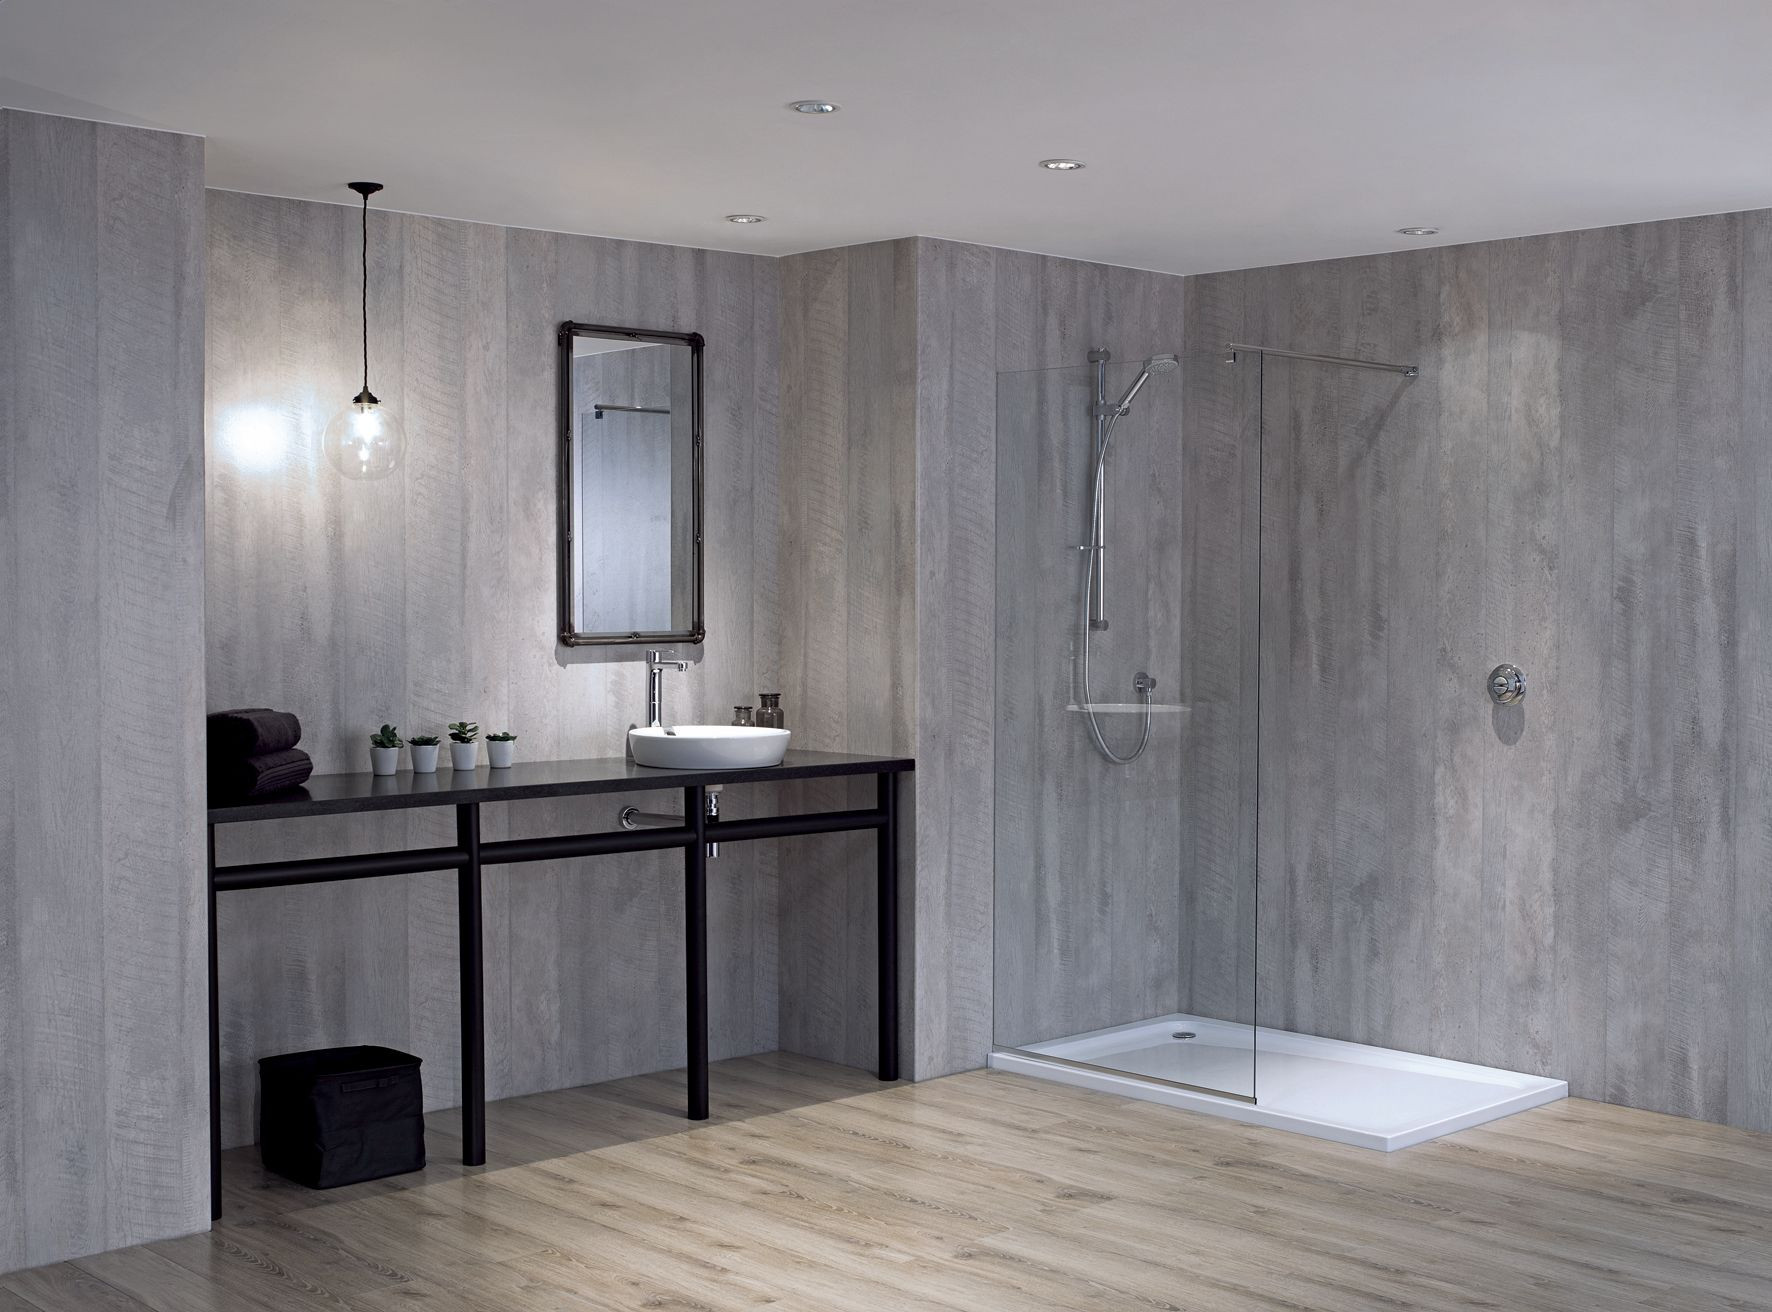 Waterproof Walls For Bathroom
 The Benefits of Bathroom Cladding